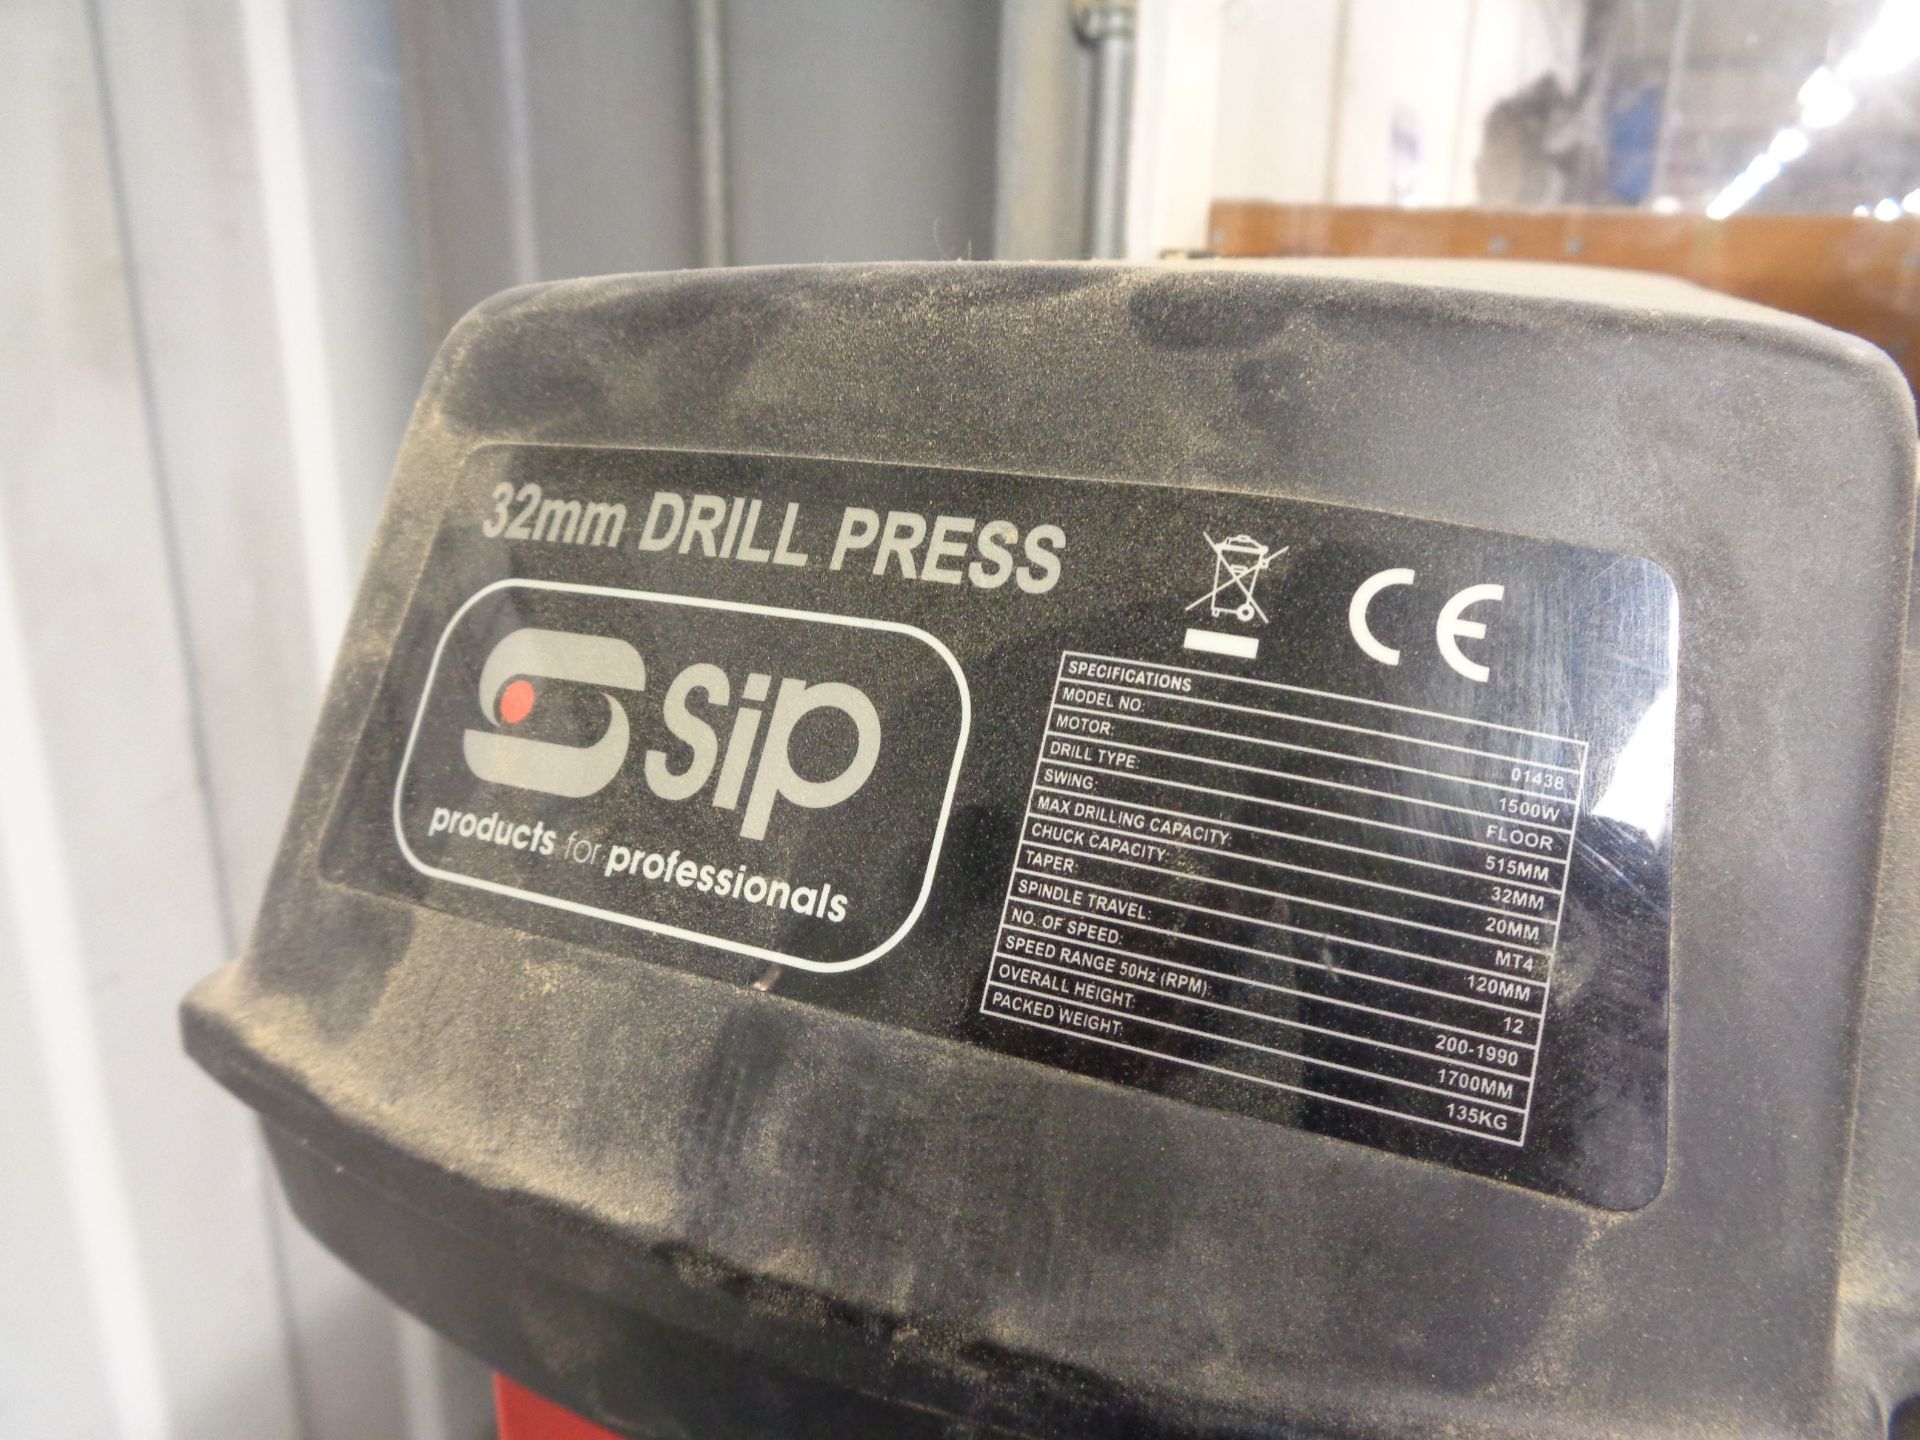 Sip 01438 32mm drill press, serial no. 43.10.09 - Image 2 of 4